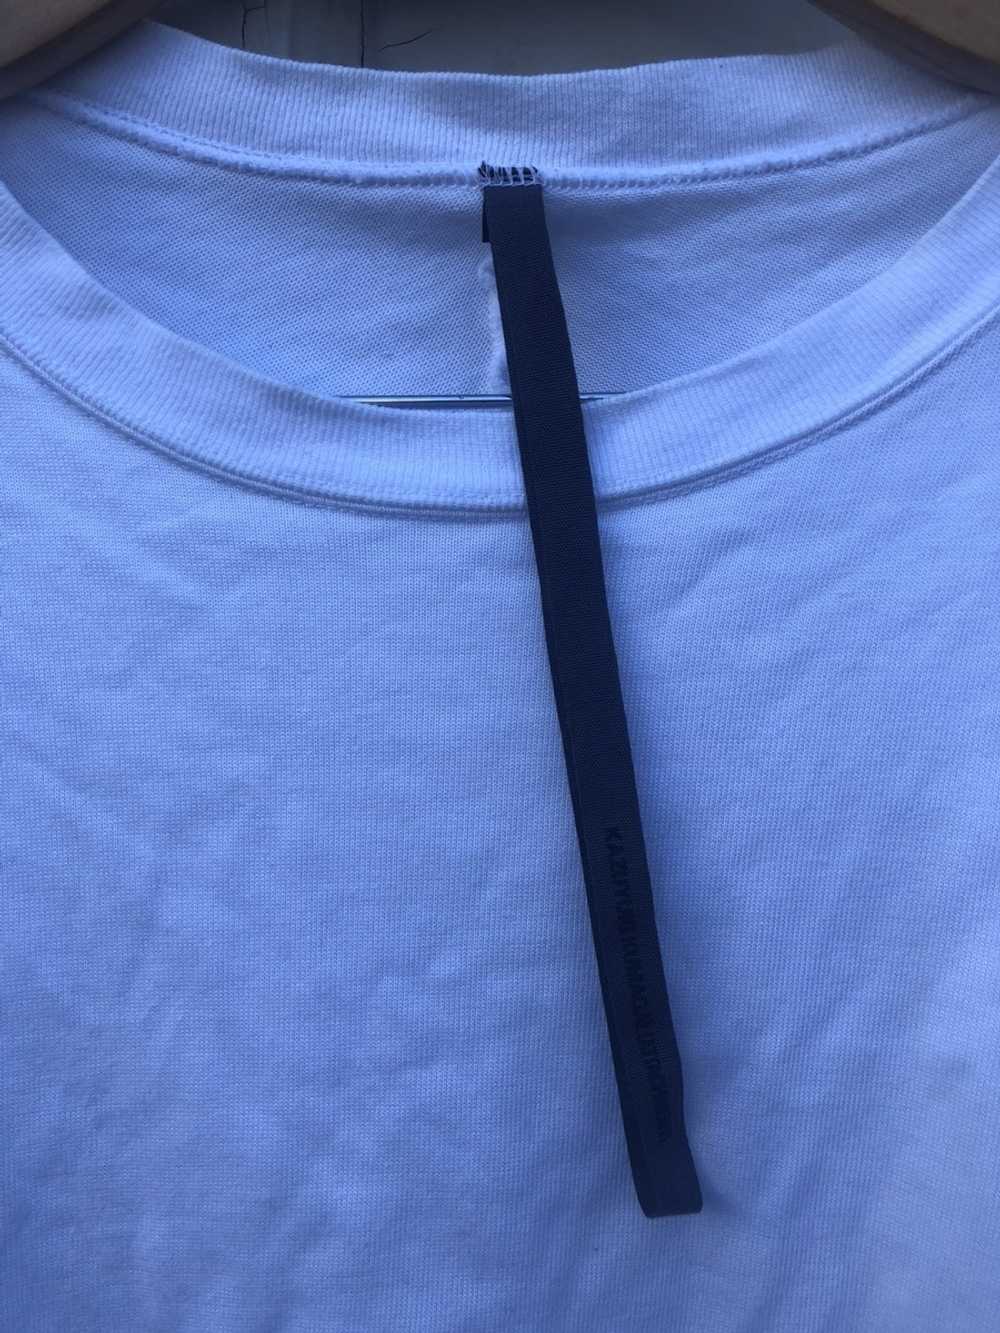 Attachment - Split hem long sleeve shirt - image 3